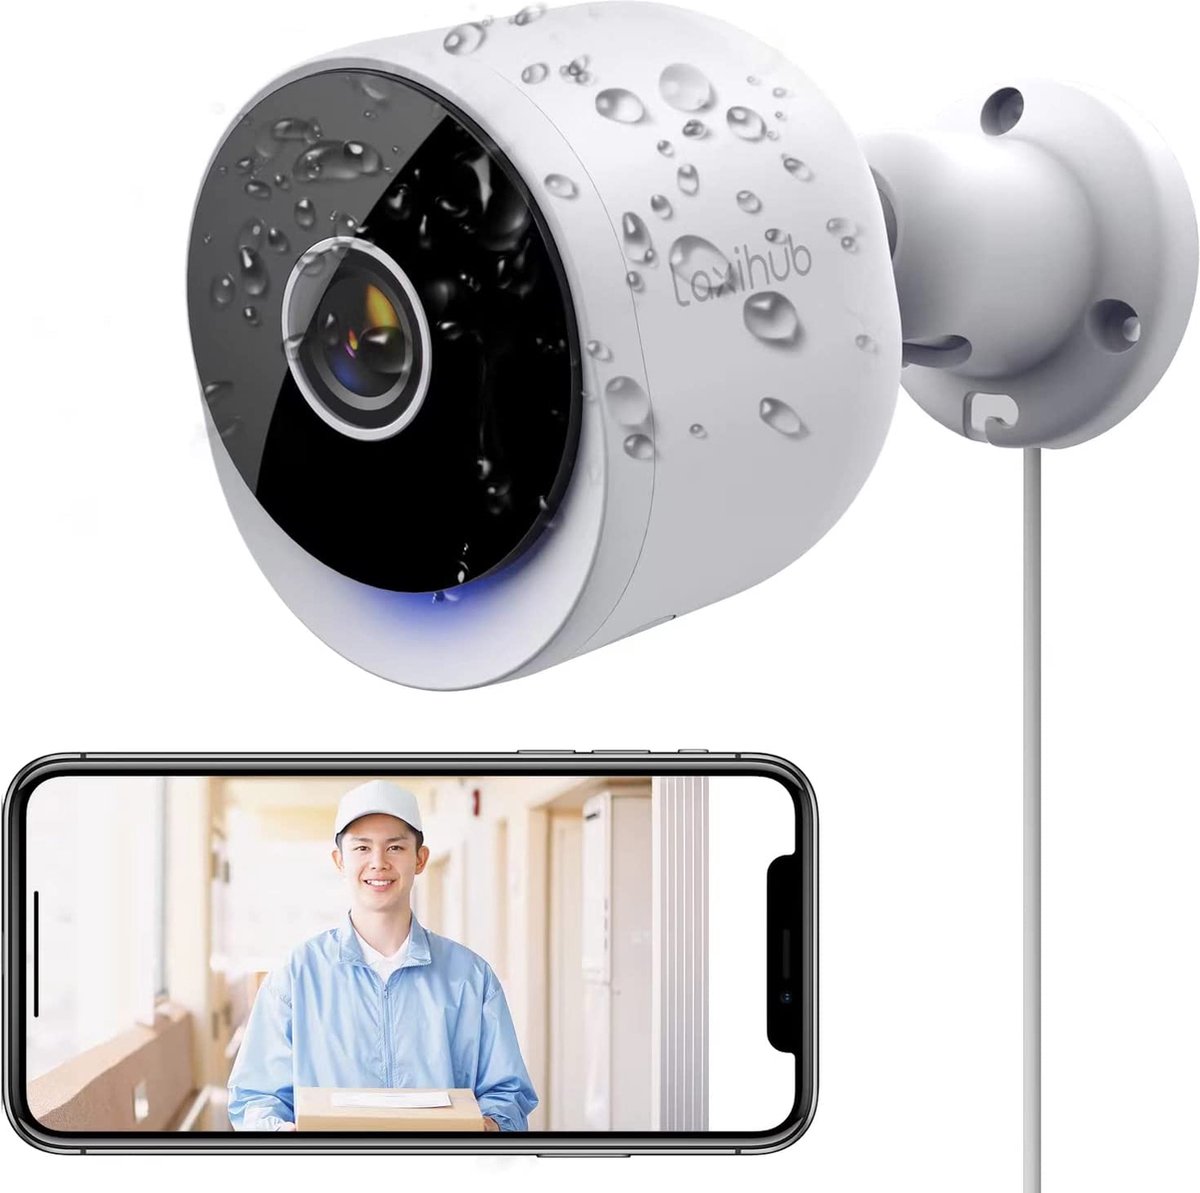 Laxihub O2 Beveiligingscamera - Buitencamera - Ultra HD 2K - Nachtvisie - AI Bewegingsdetectie - Alexa & Google